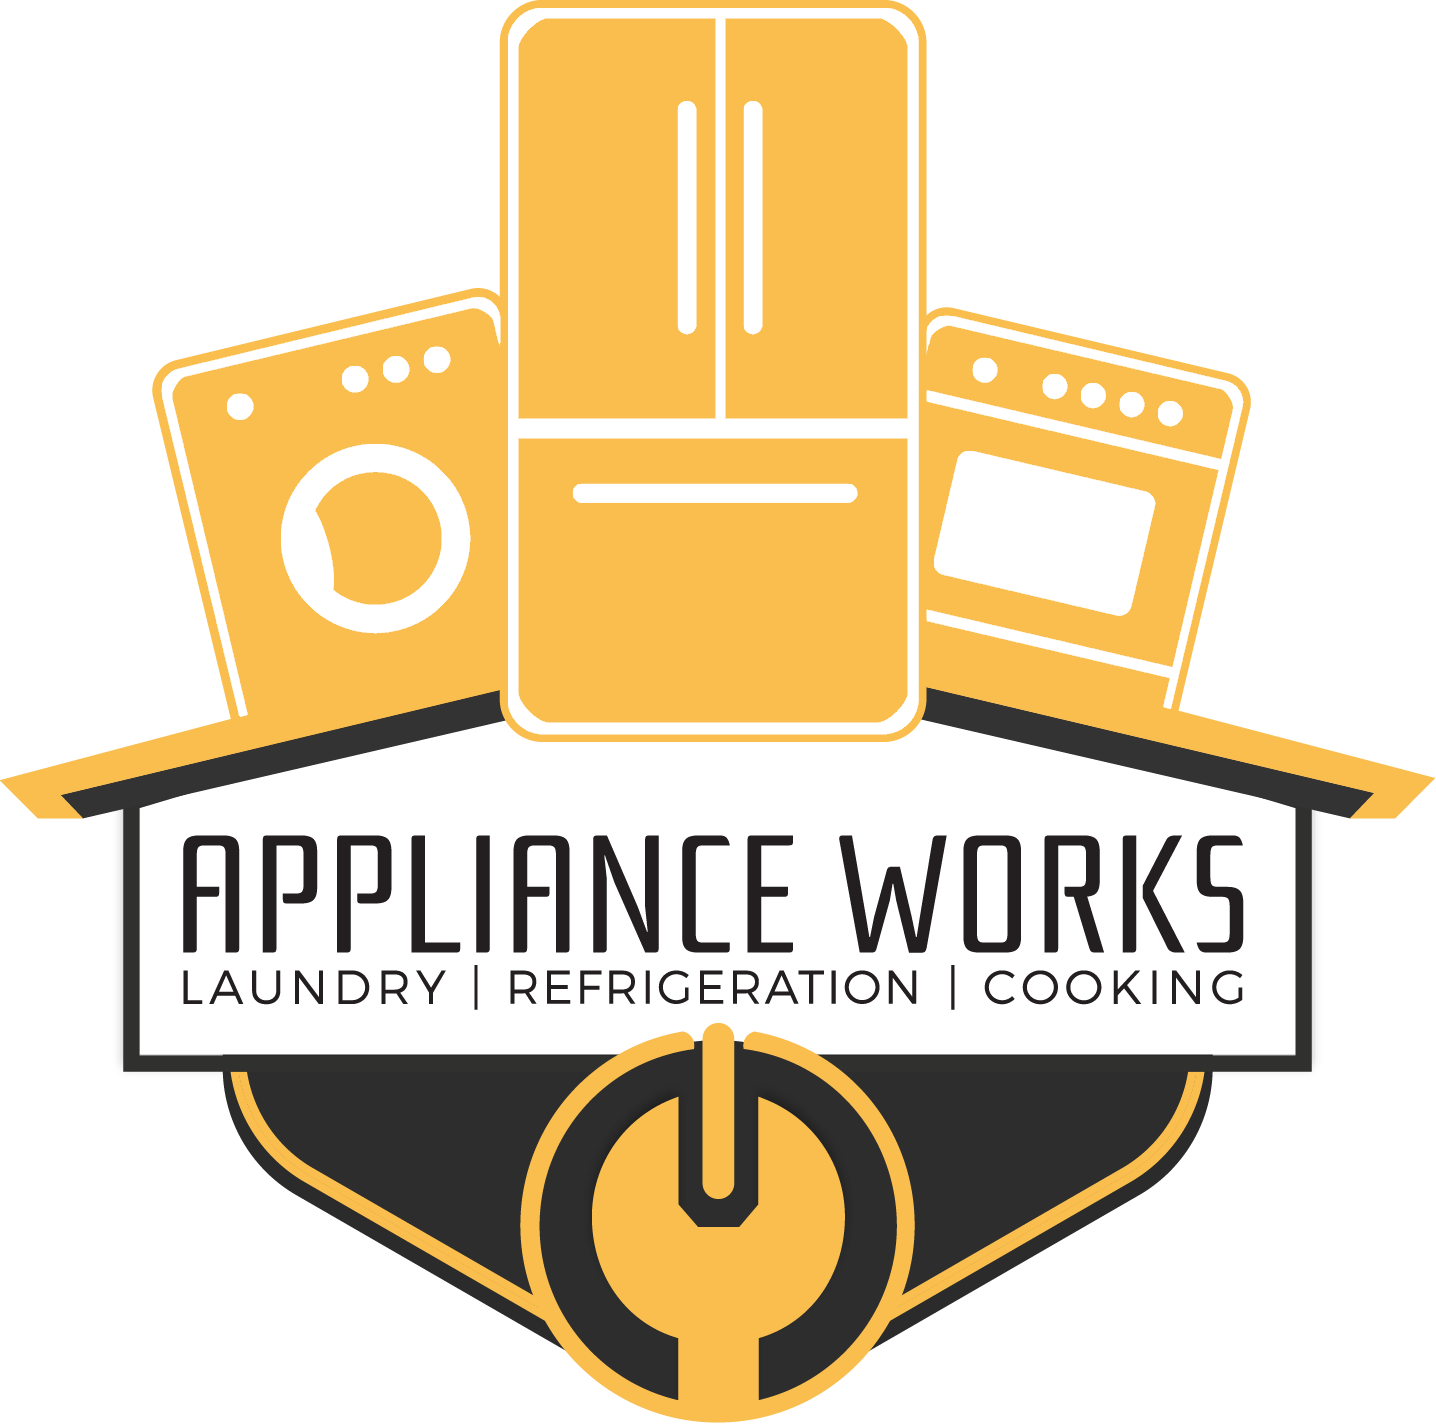 Appliance Works